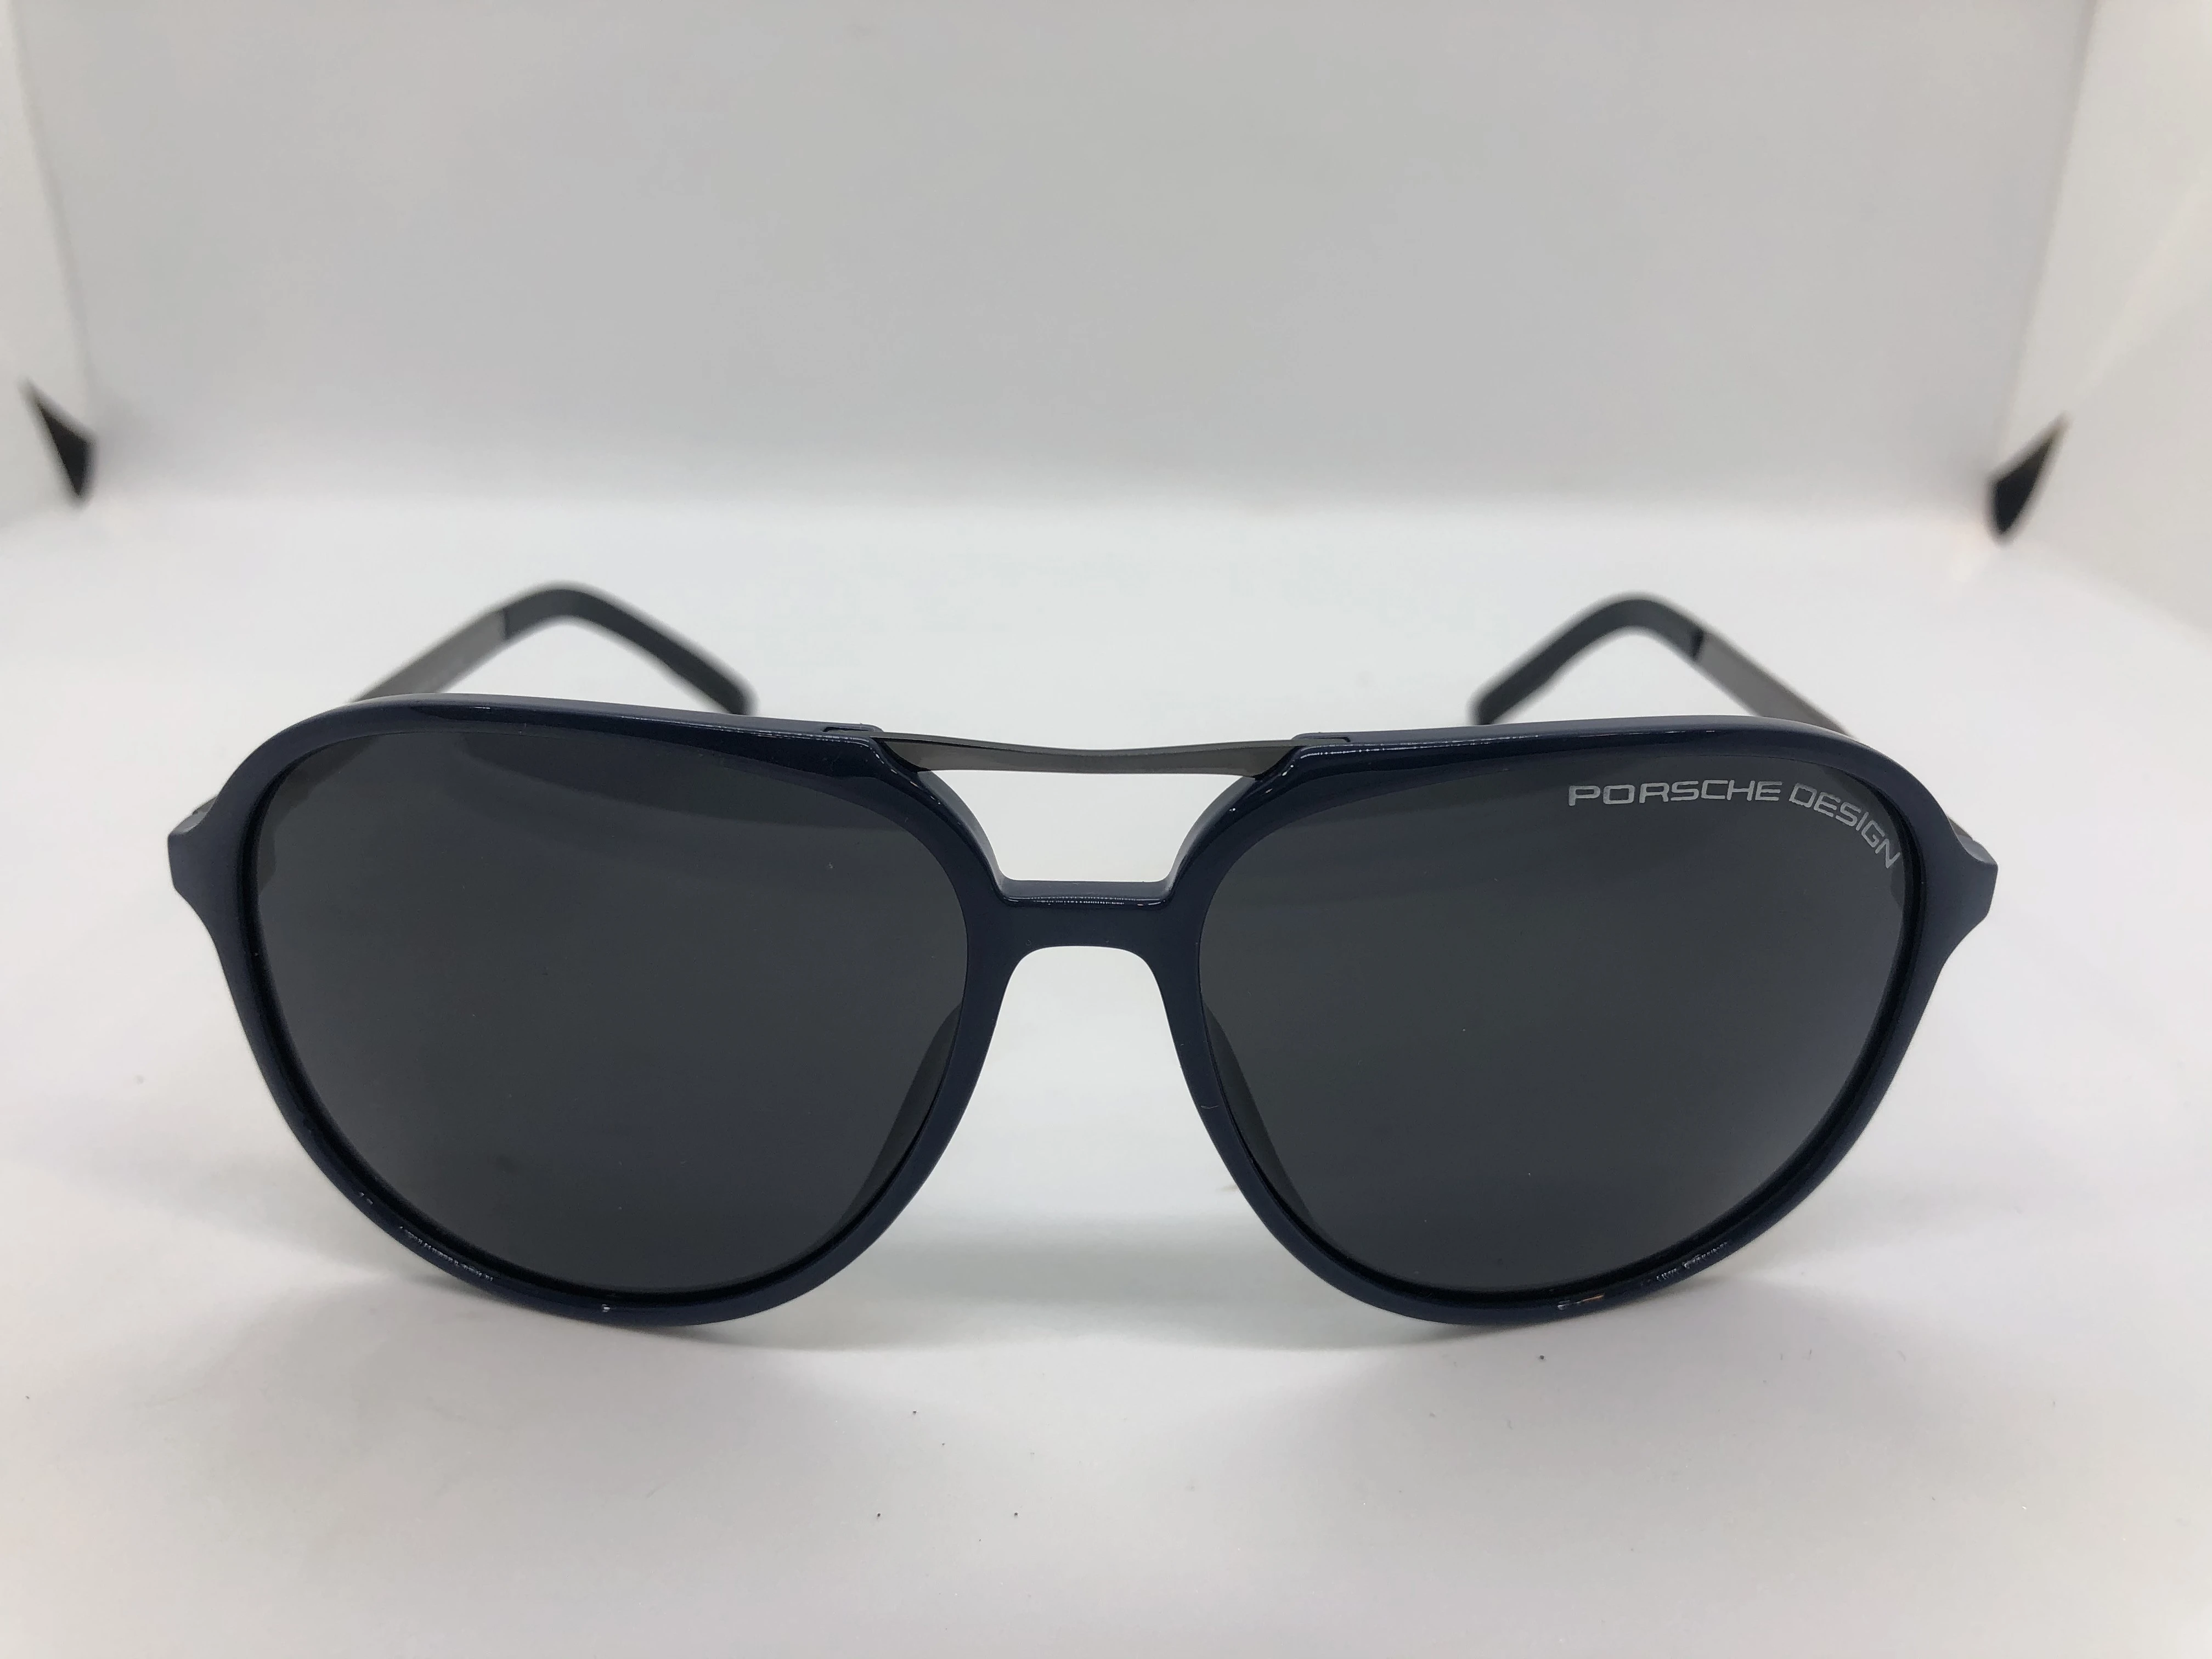 Sunglasses - Porsche Design - Polycarbonate Frame -  dark blue Lenses - Black Metal Arm - For Men